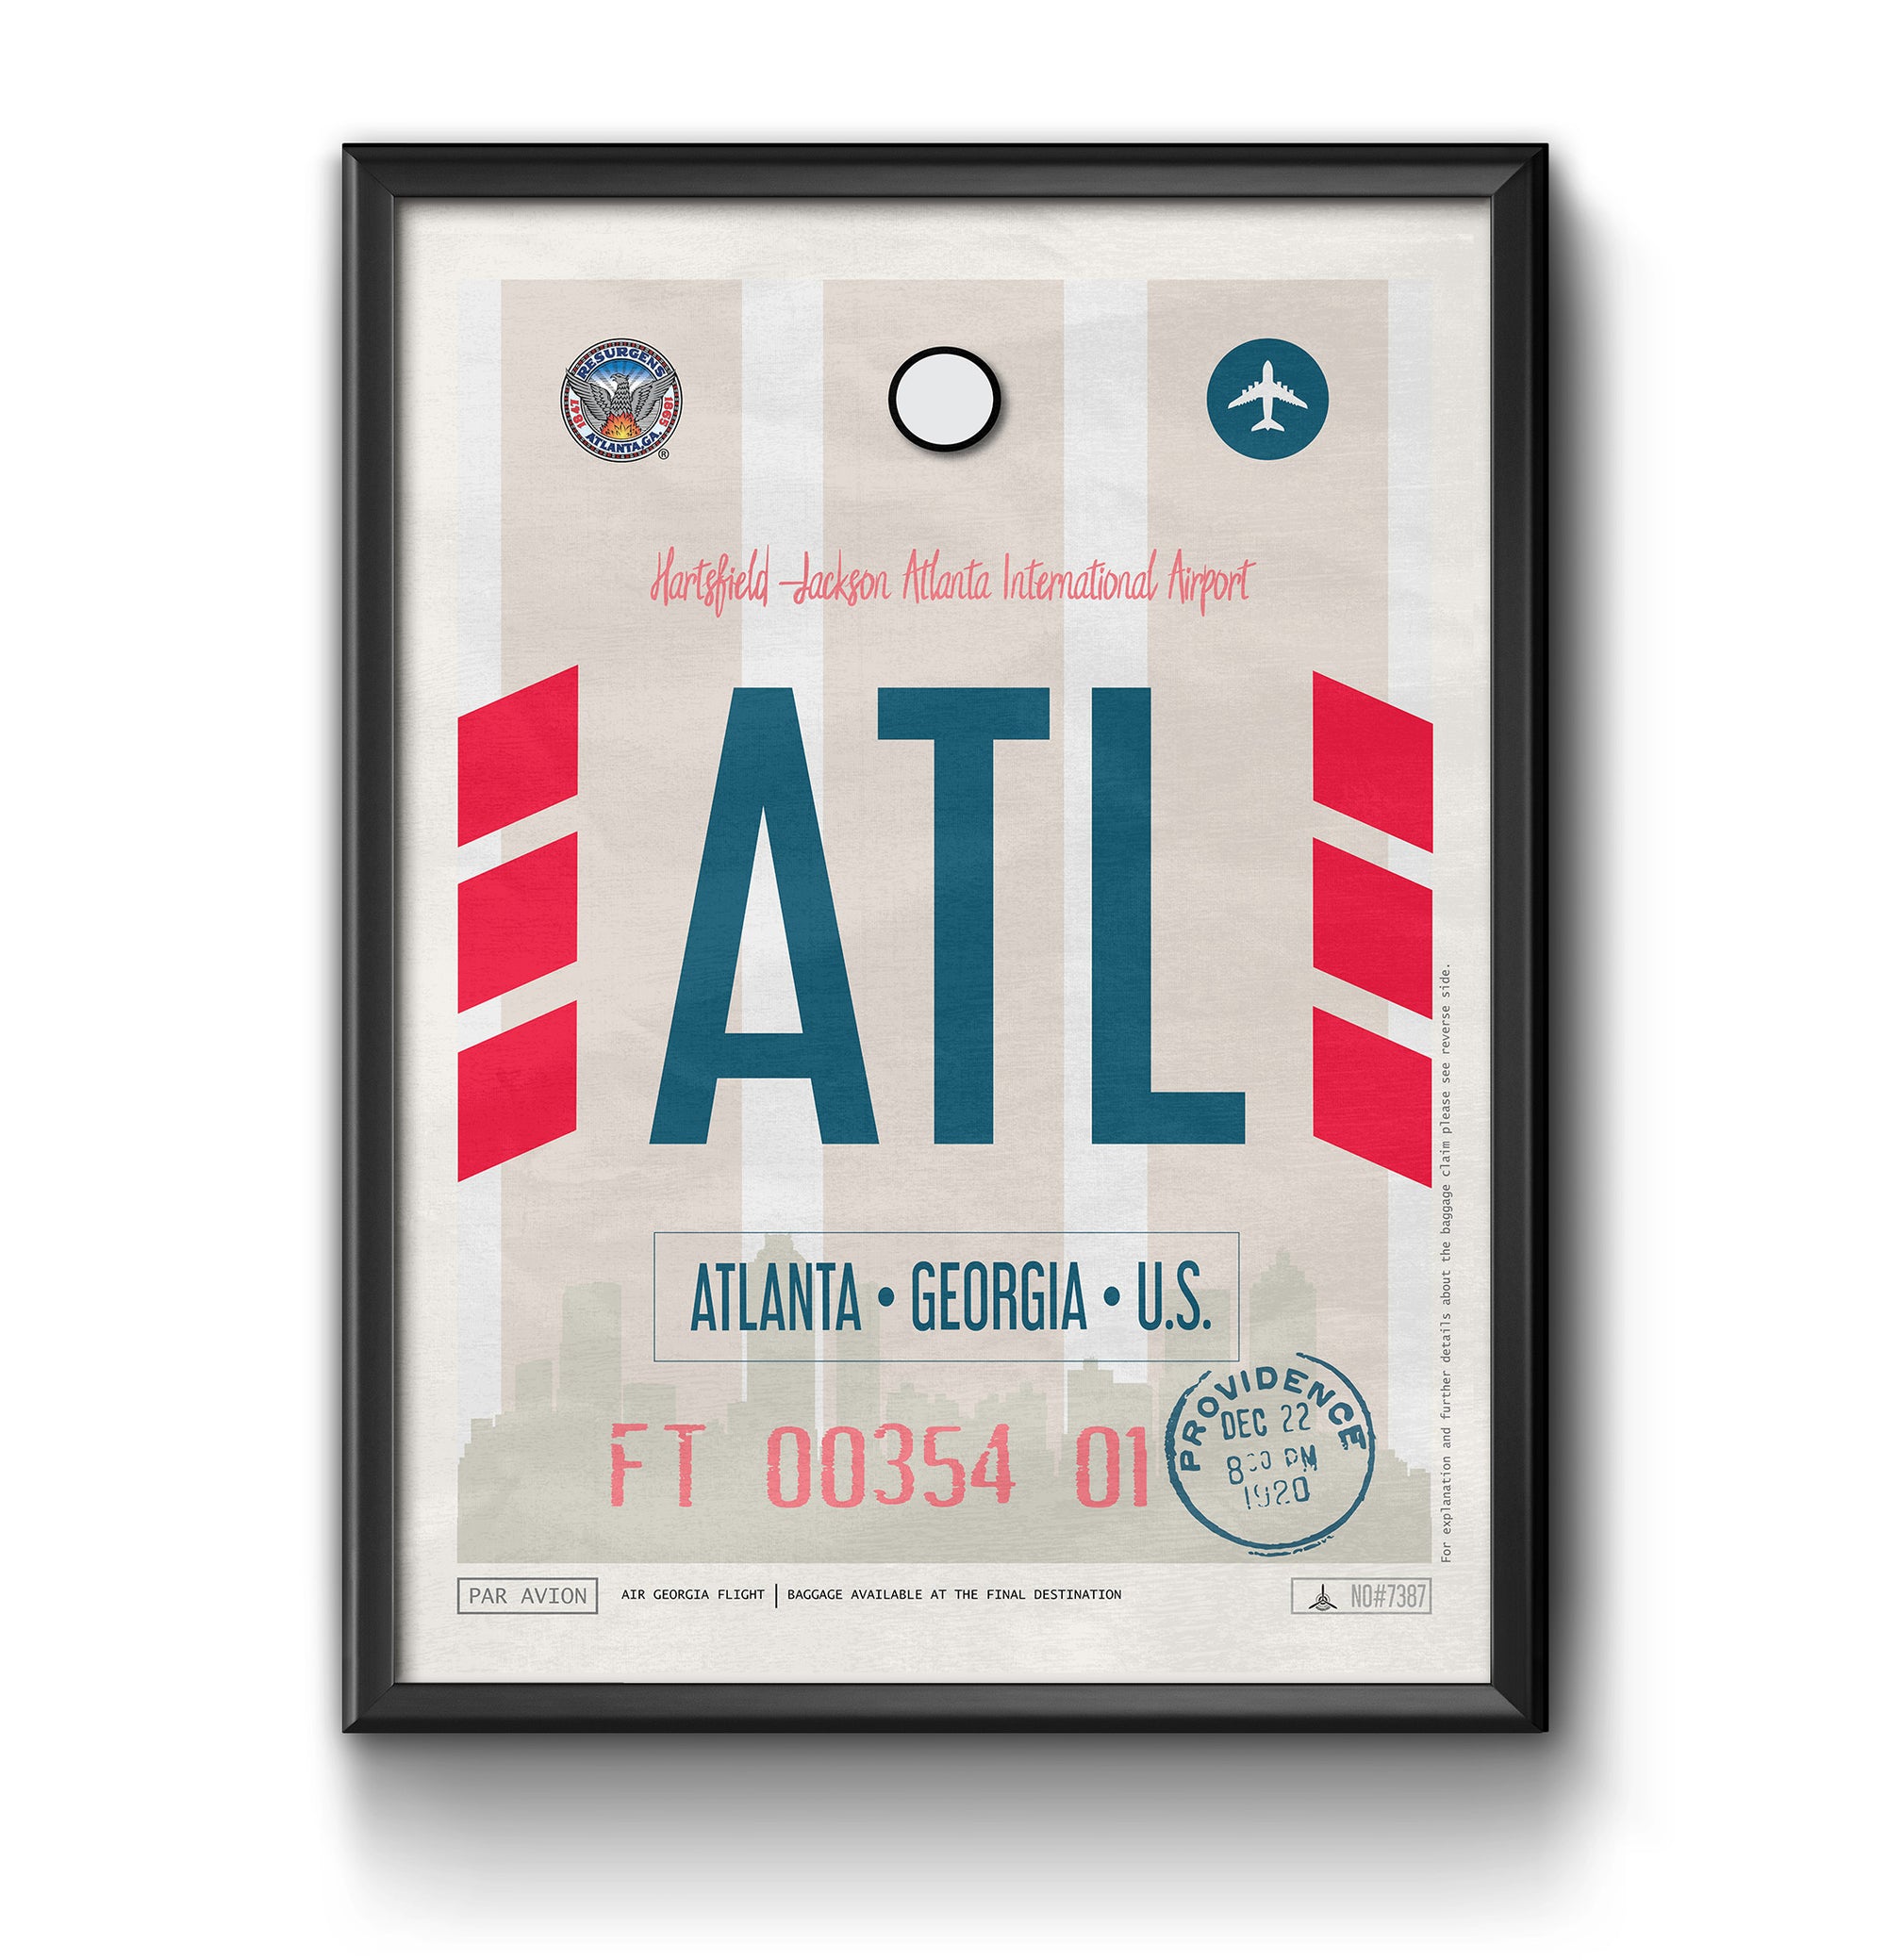 Atlanta Georgia ATL airport tag poster luggage tag 